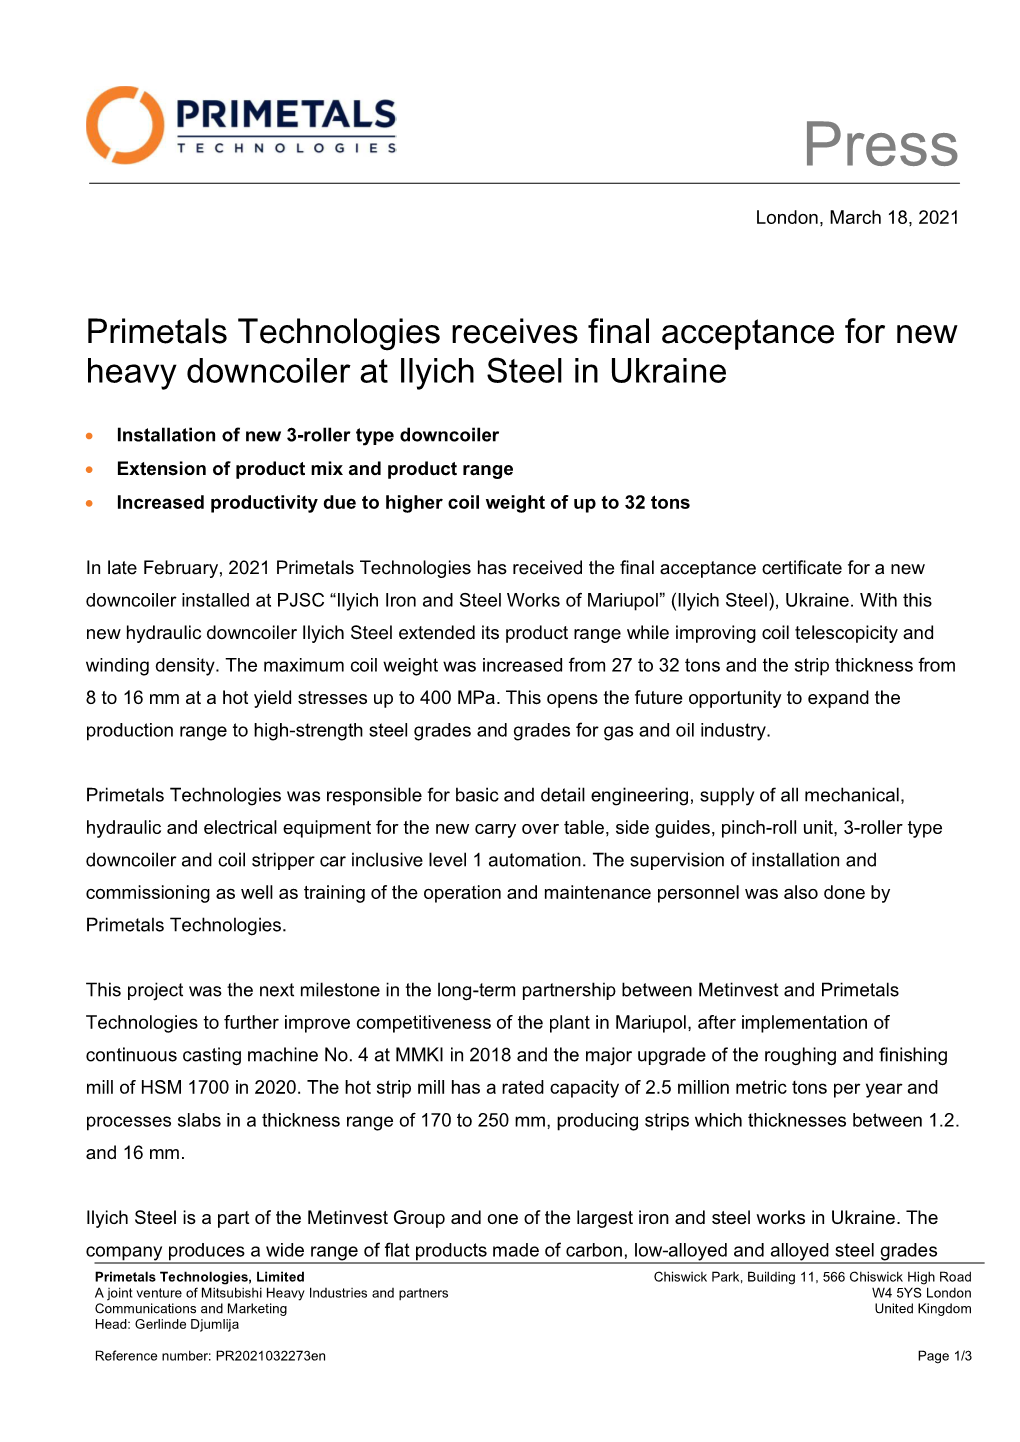 Primetals Technologies Receives Final Acceptance for New Heavy Downcoiler at Ilyich Steel in Ukraine